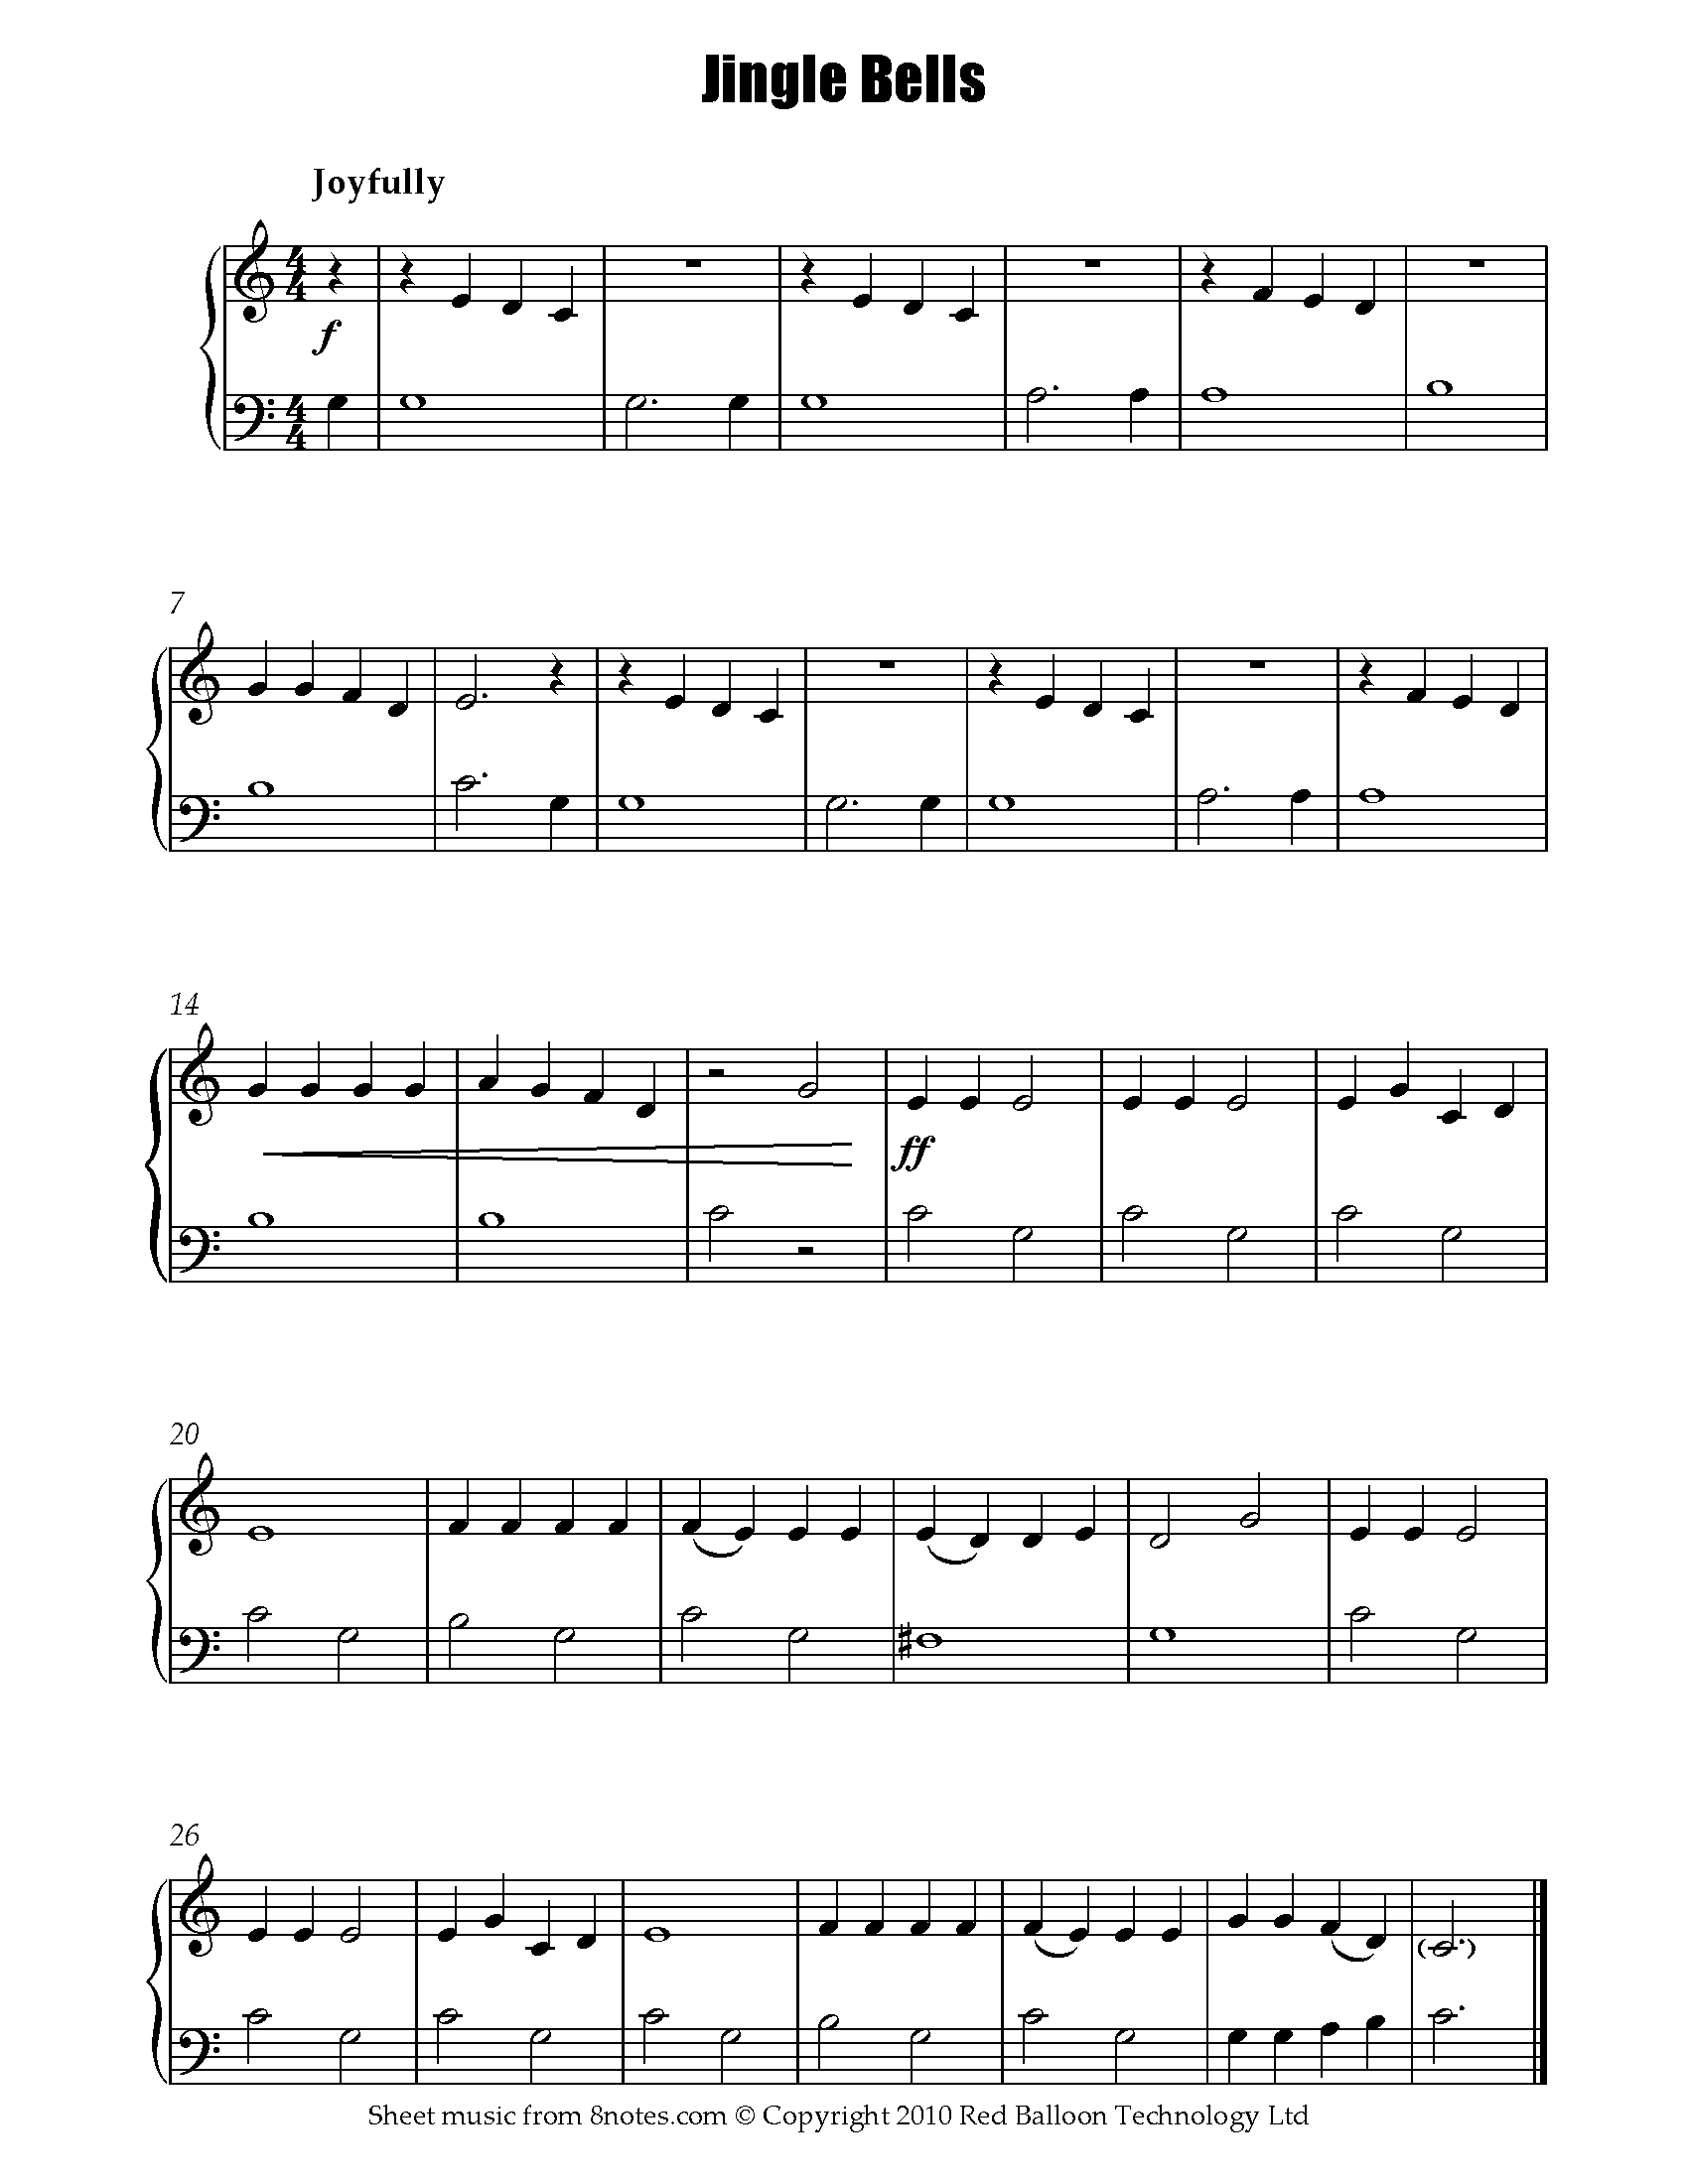 Jingle Bells (easy) Sheet music for Piano